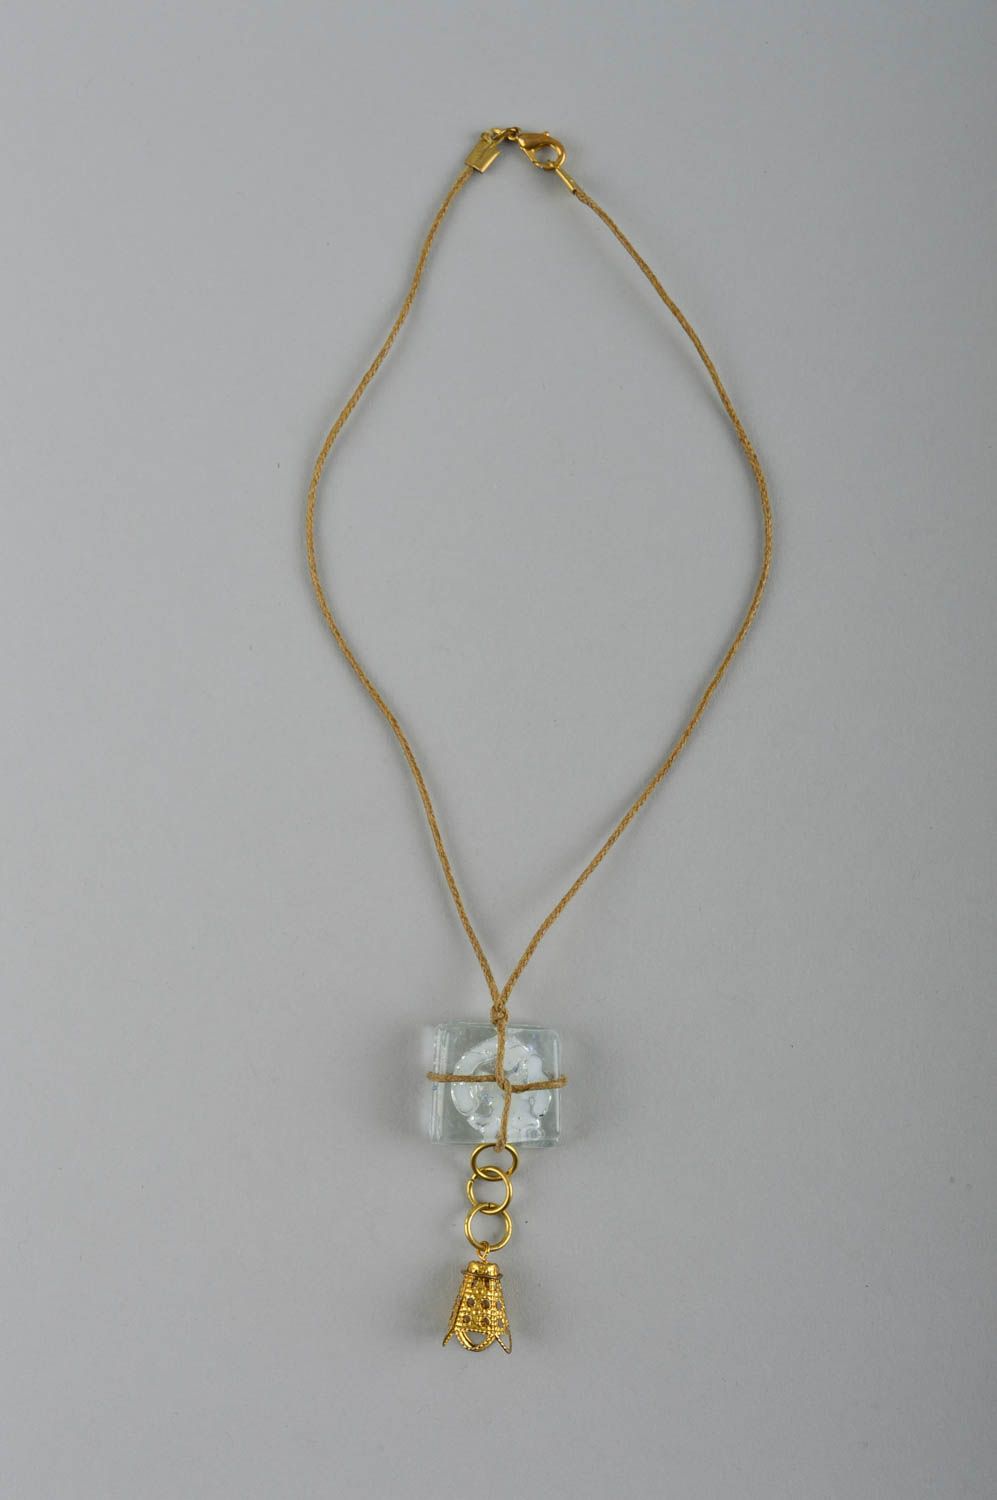 Handmade designer glass pendant unusual stylish pendant neck jewelry gift photo 3